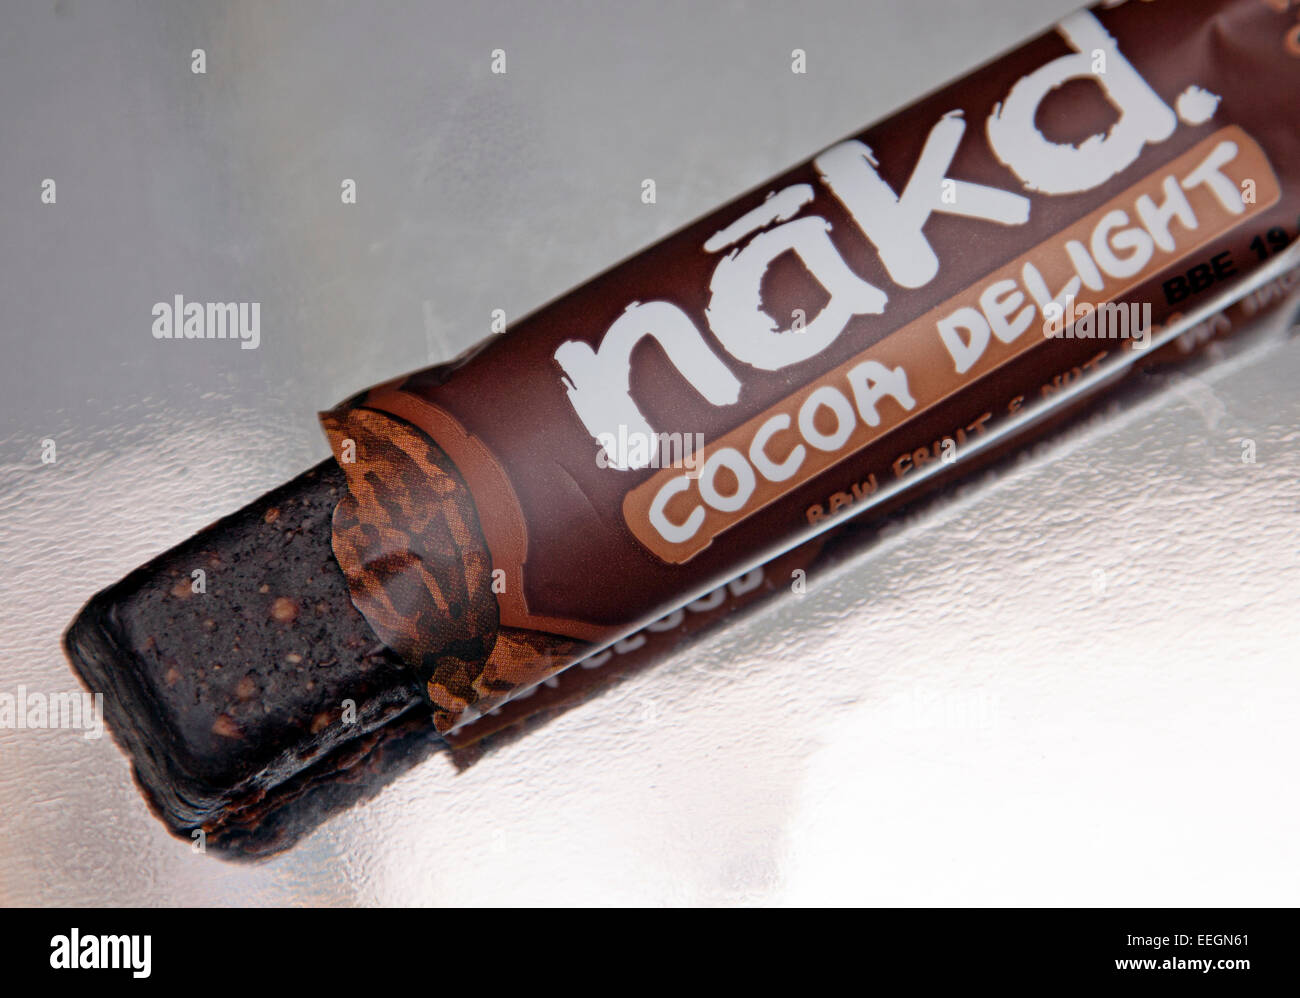 Nakd Cocoa Delight raw fruit and nut bar, London Stock Photo